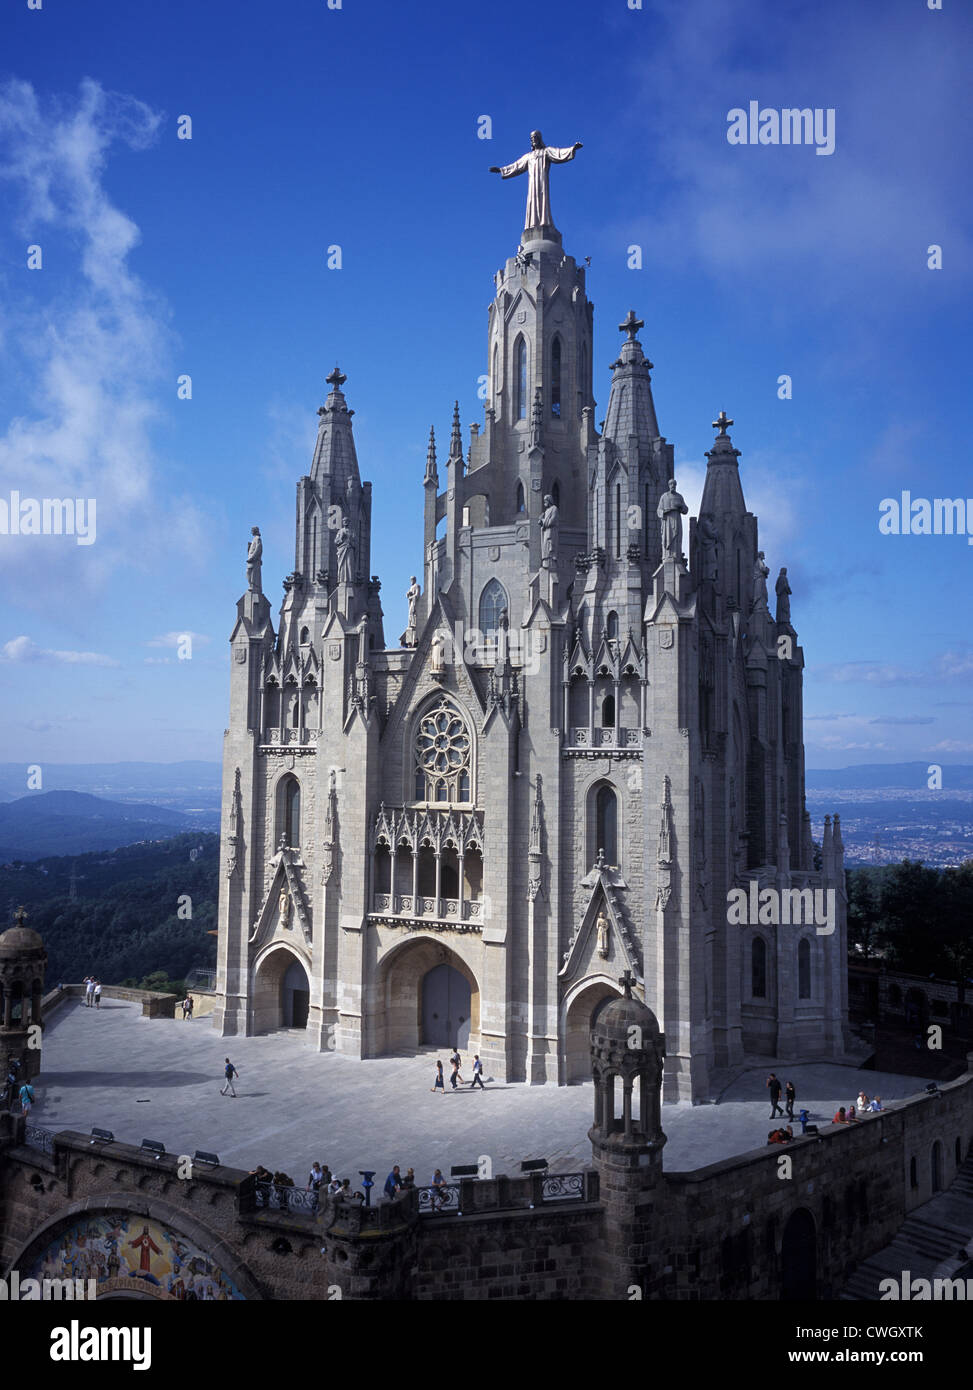 España, Barcelona, el Templo Expiatori del Sagrat Cor en el Tibidabo. Foto de stock